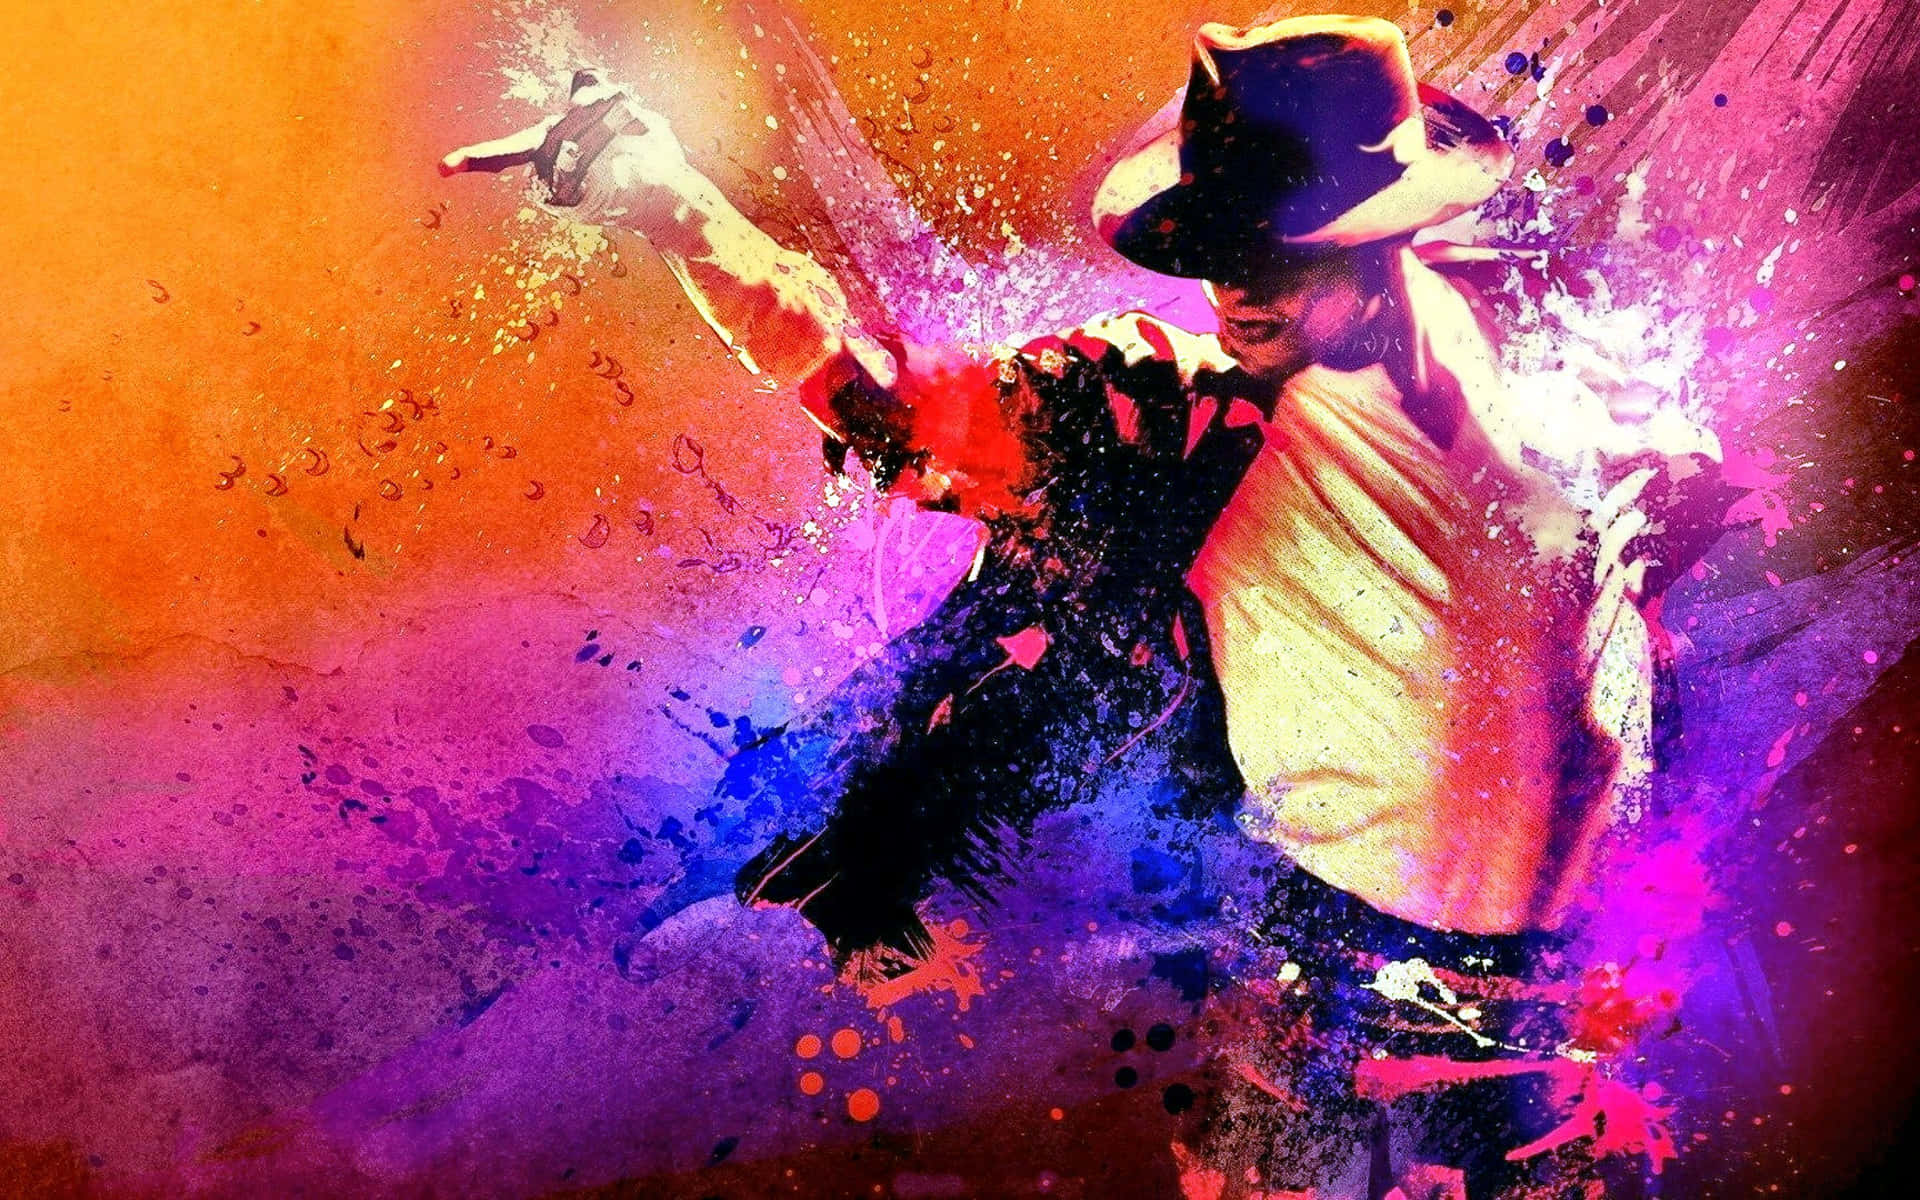 Michael Jackson's iconic stage presence